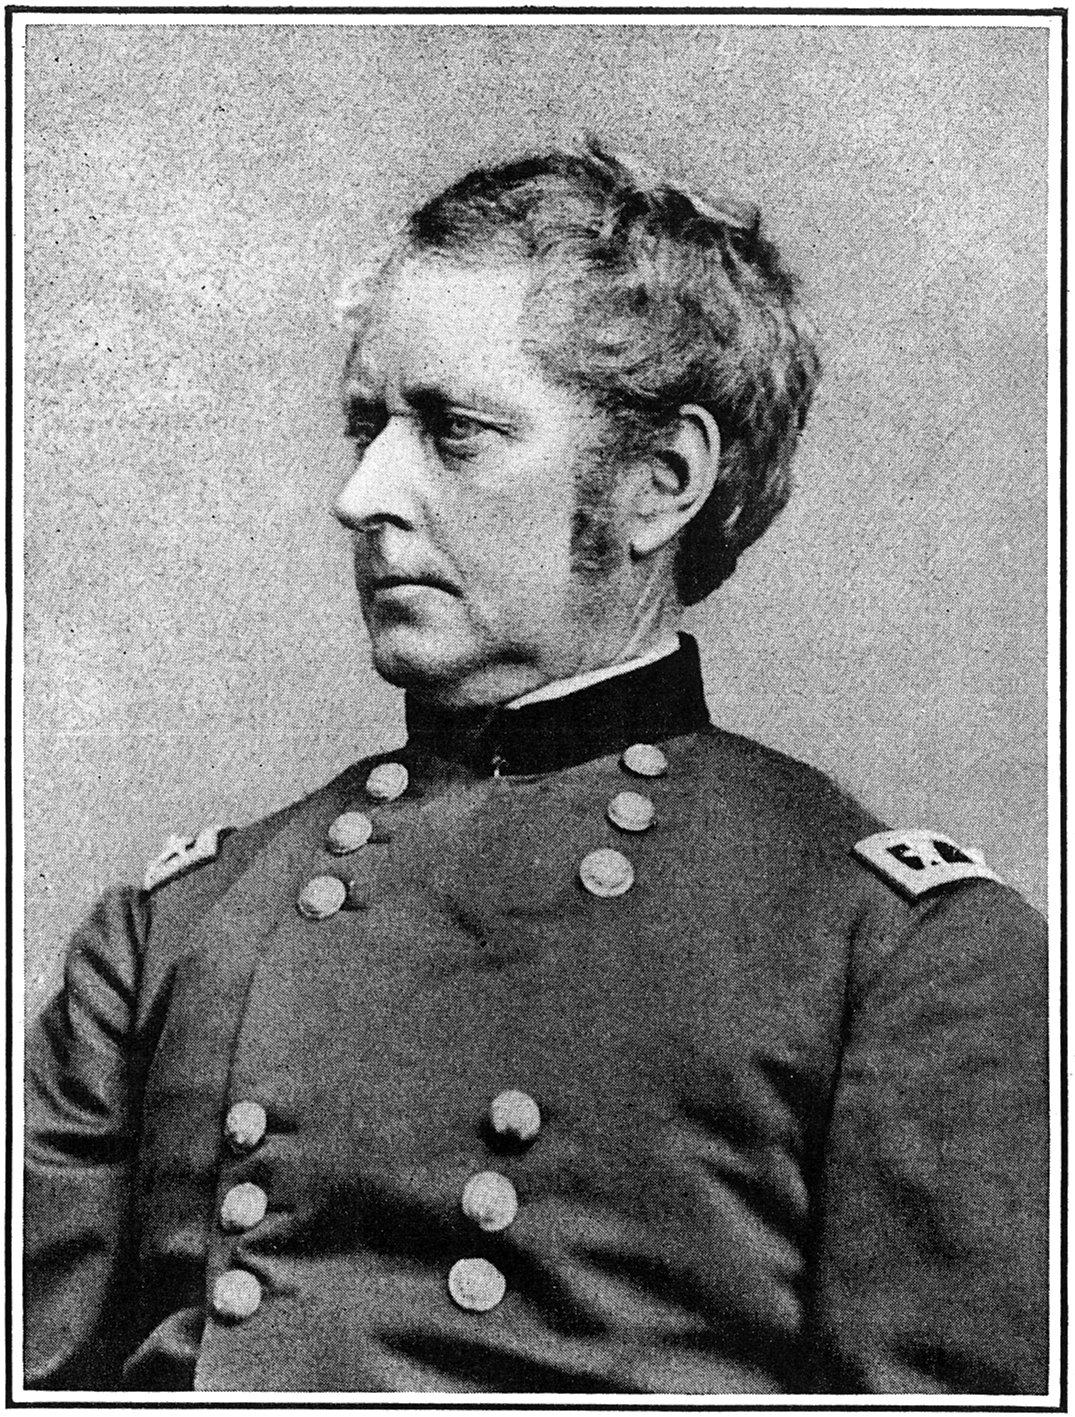 General Joseph Hooker